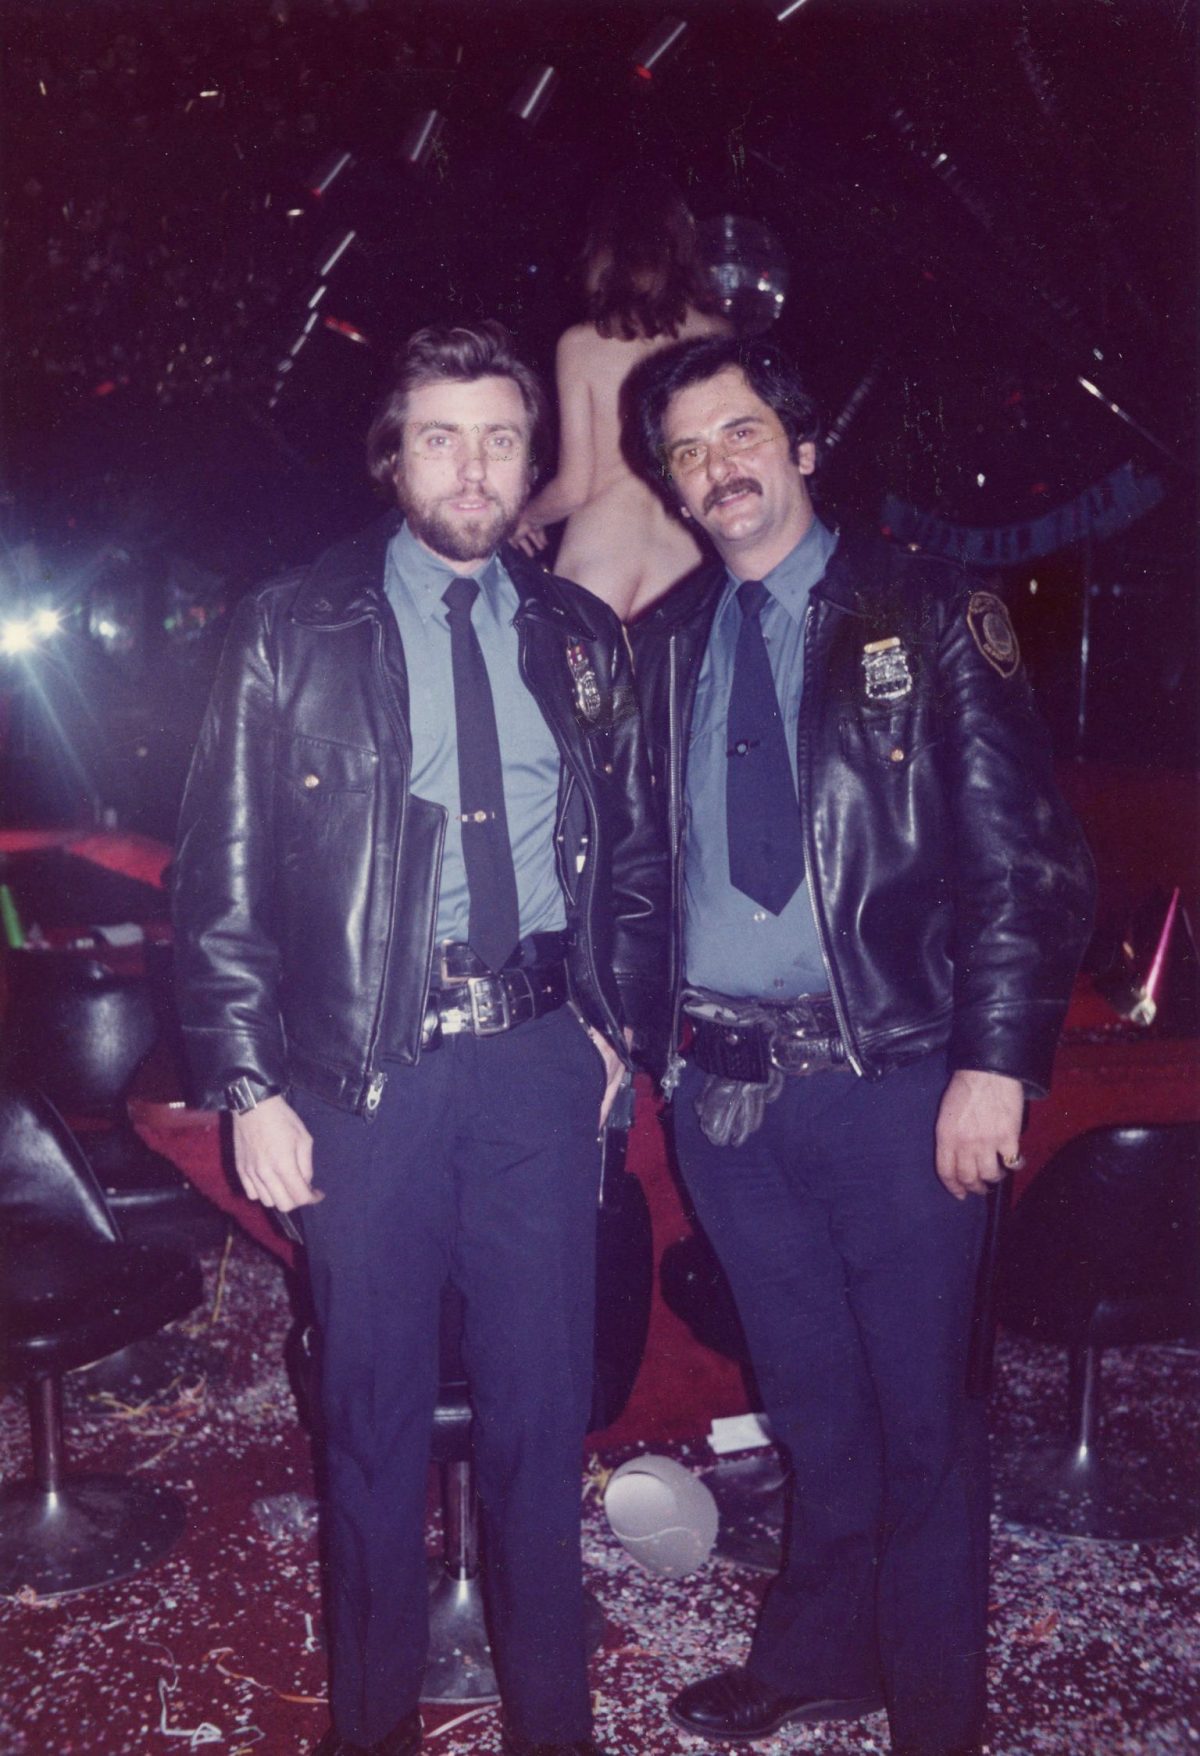 NYC clubs 1970s